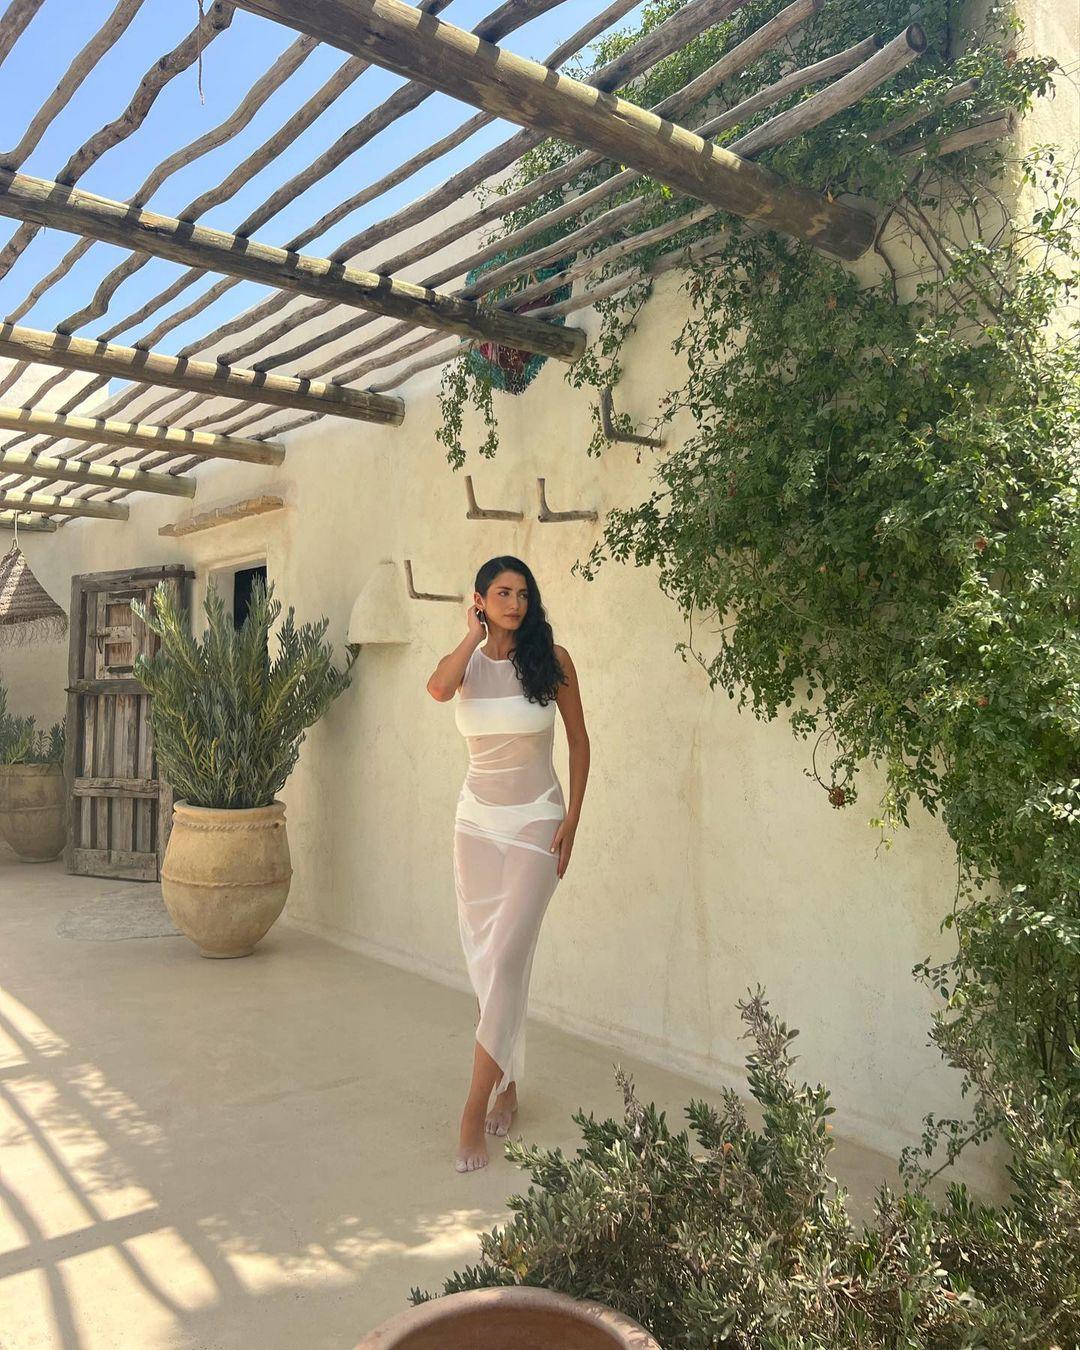 Ariel Frenkel Wears Mesh White Dress While Vacationing In Spain